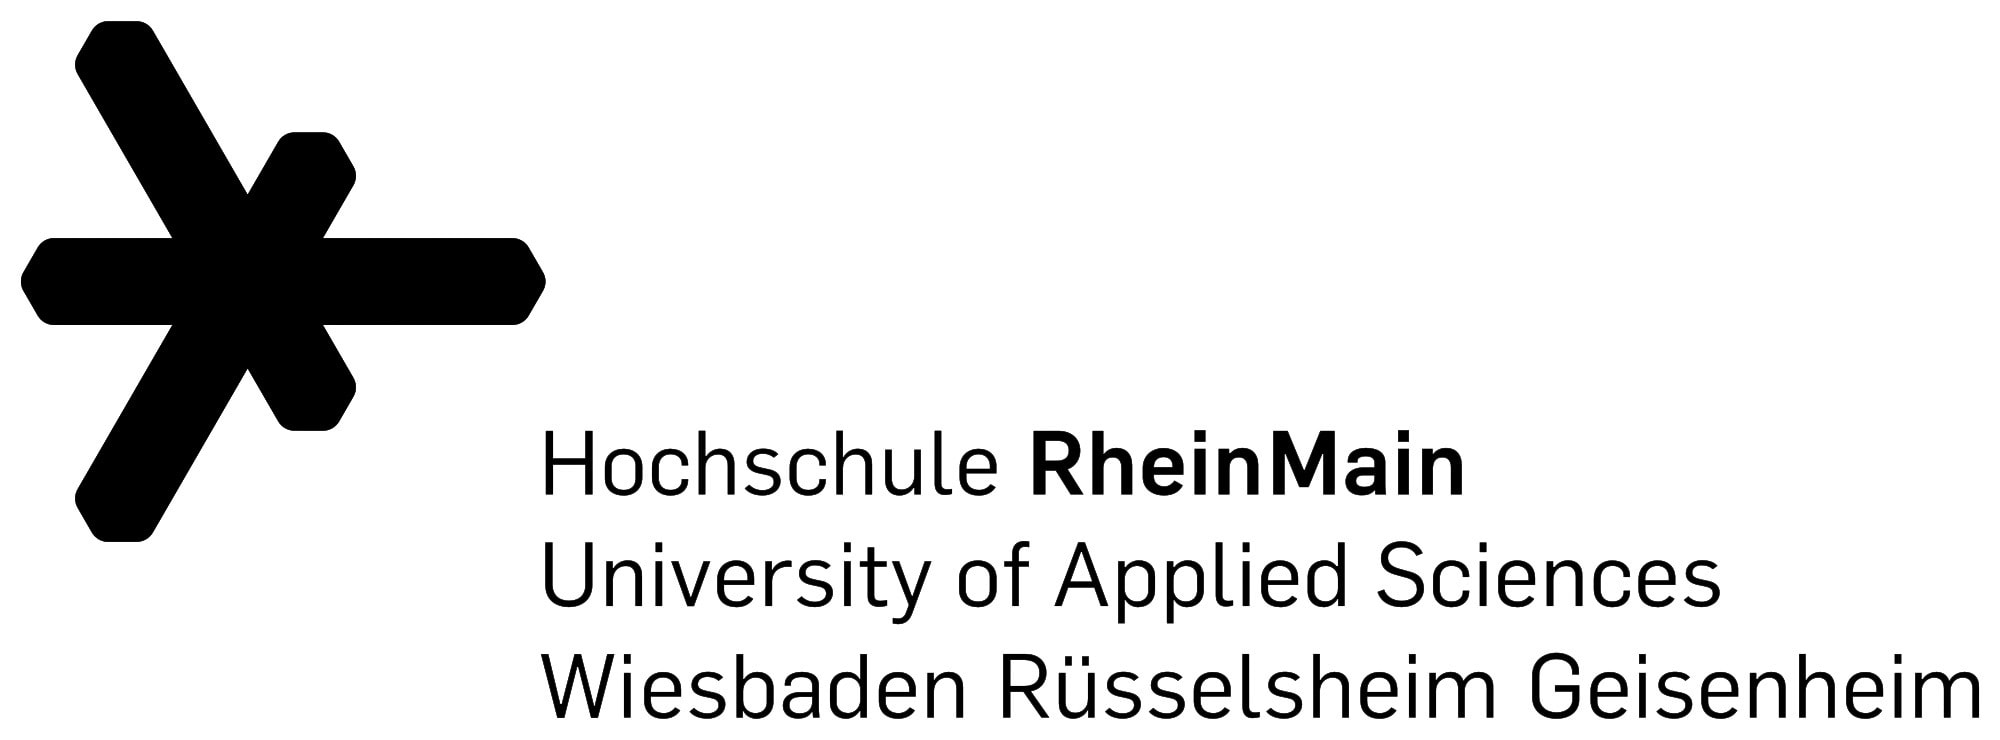 Hochschule_RheinMain_logo